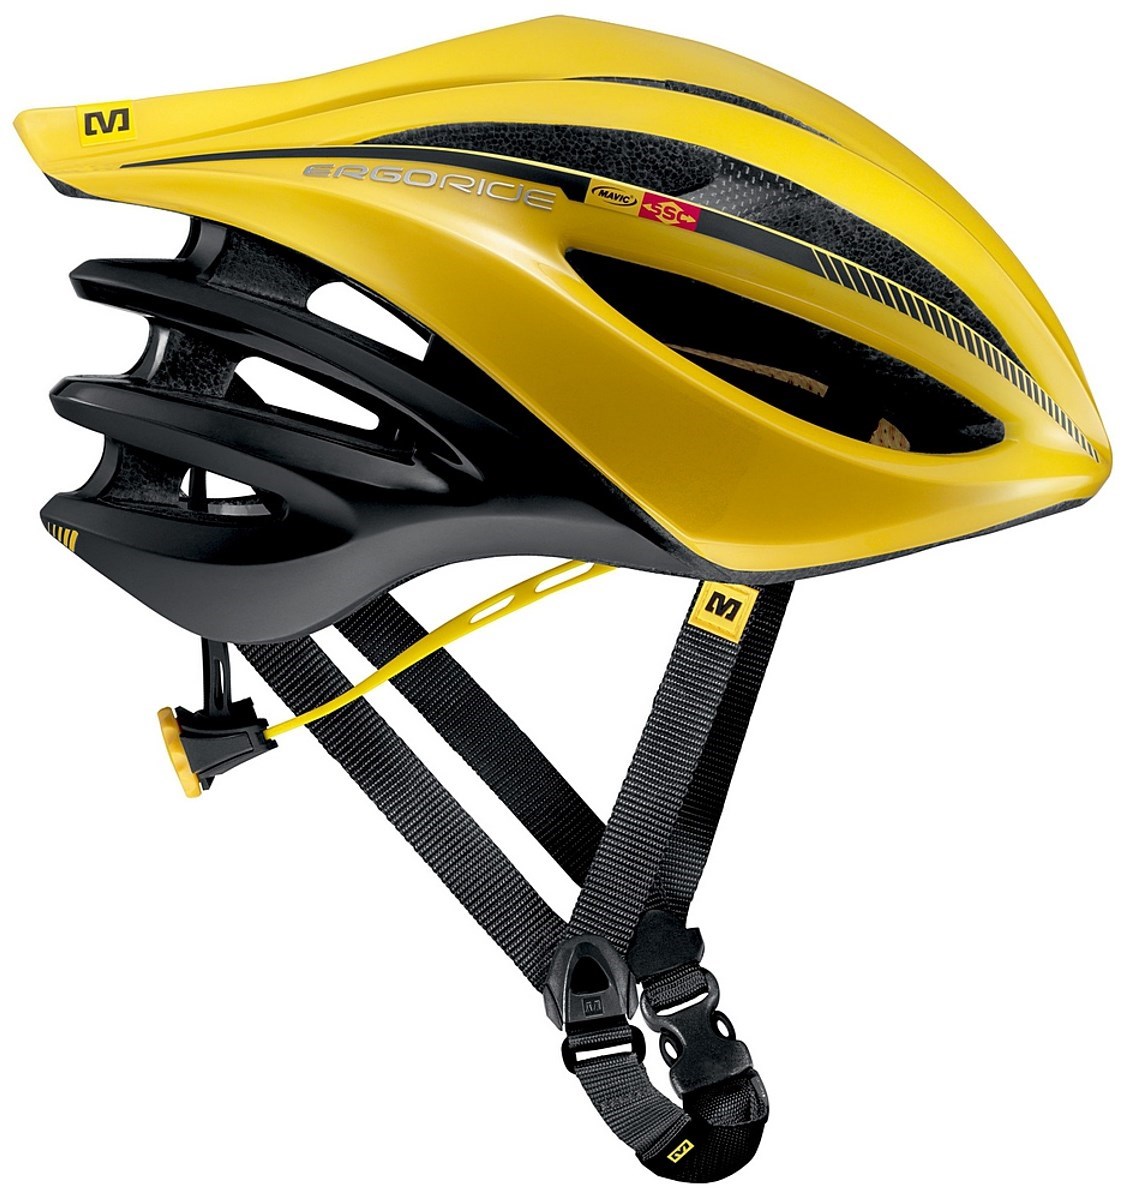 Mavic Plasma SLR Road Cycling Helmet product image